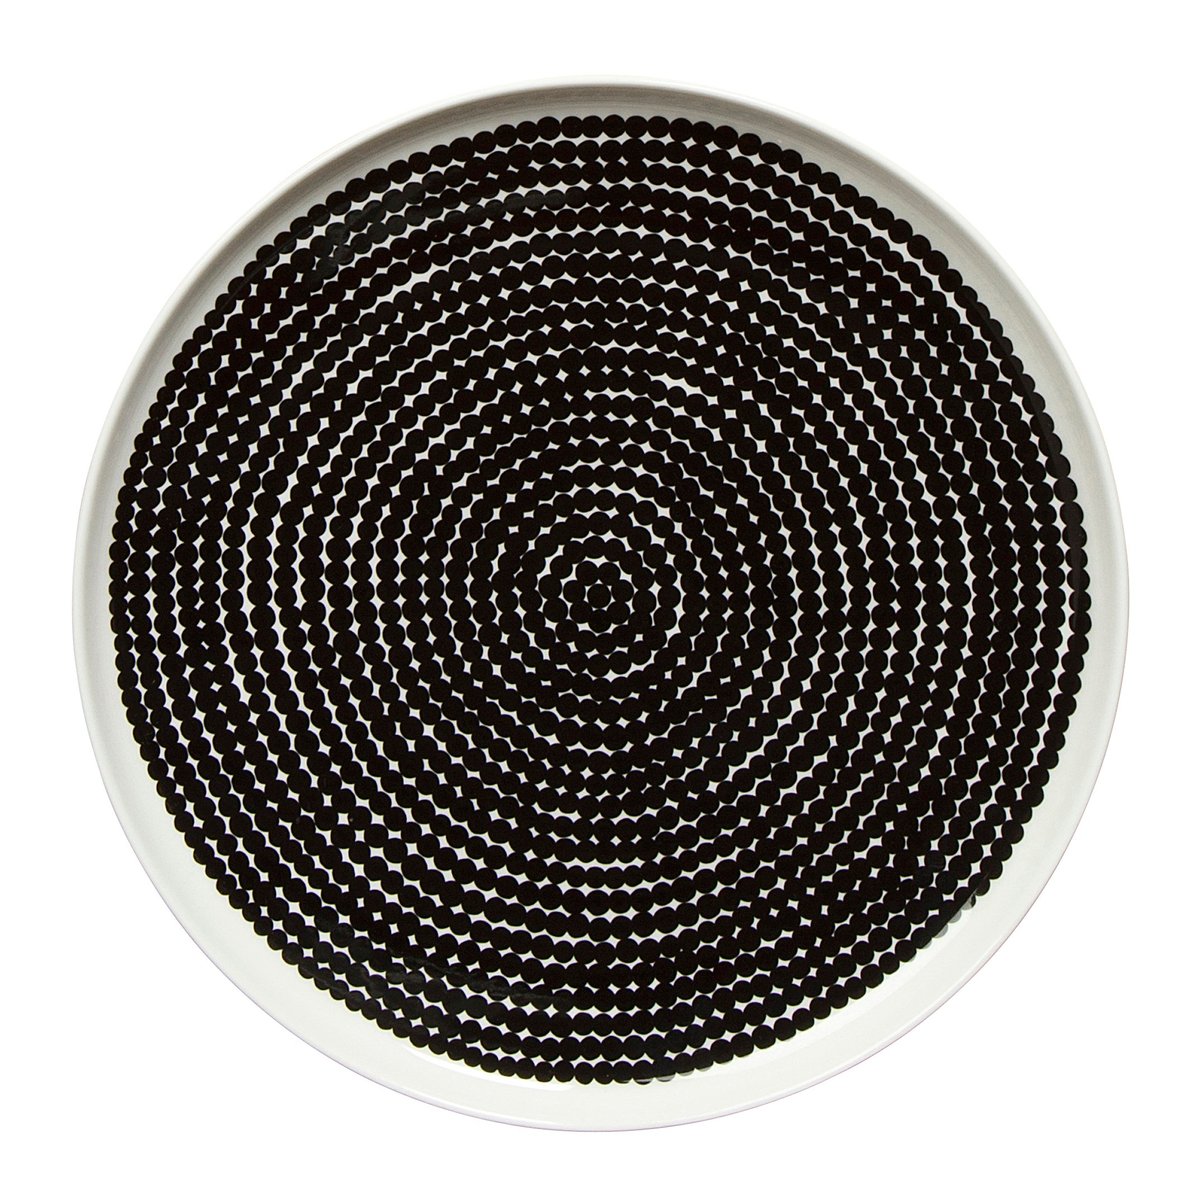 Marimekko Räsymatto tallrik Ø 25 cm svart-vit (små prickar)